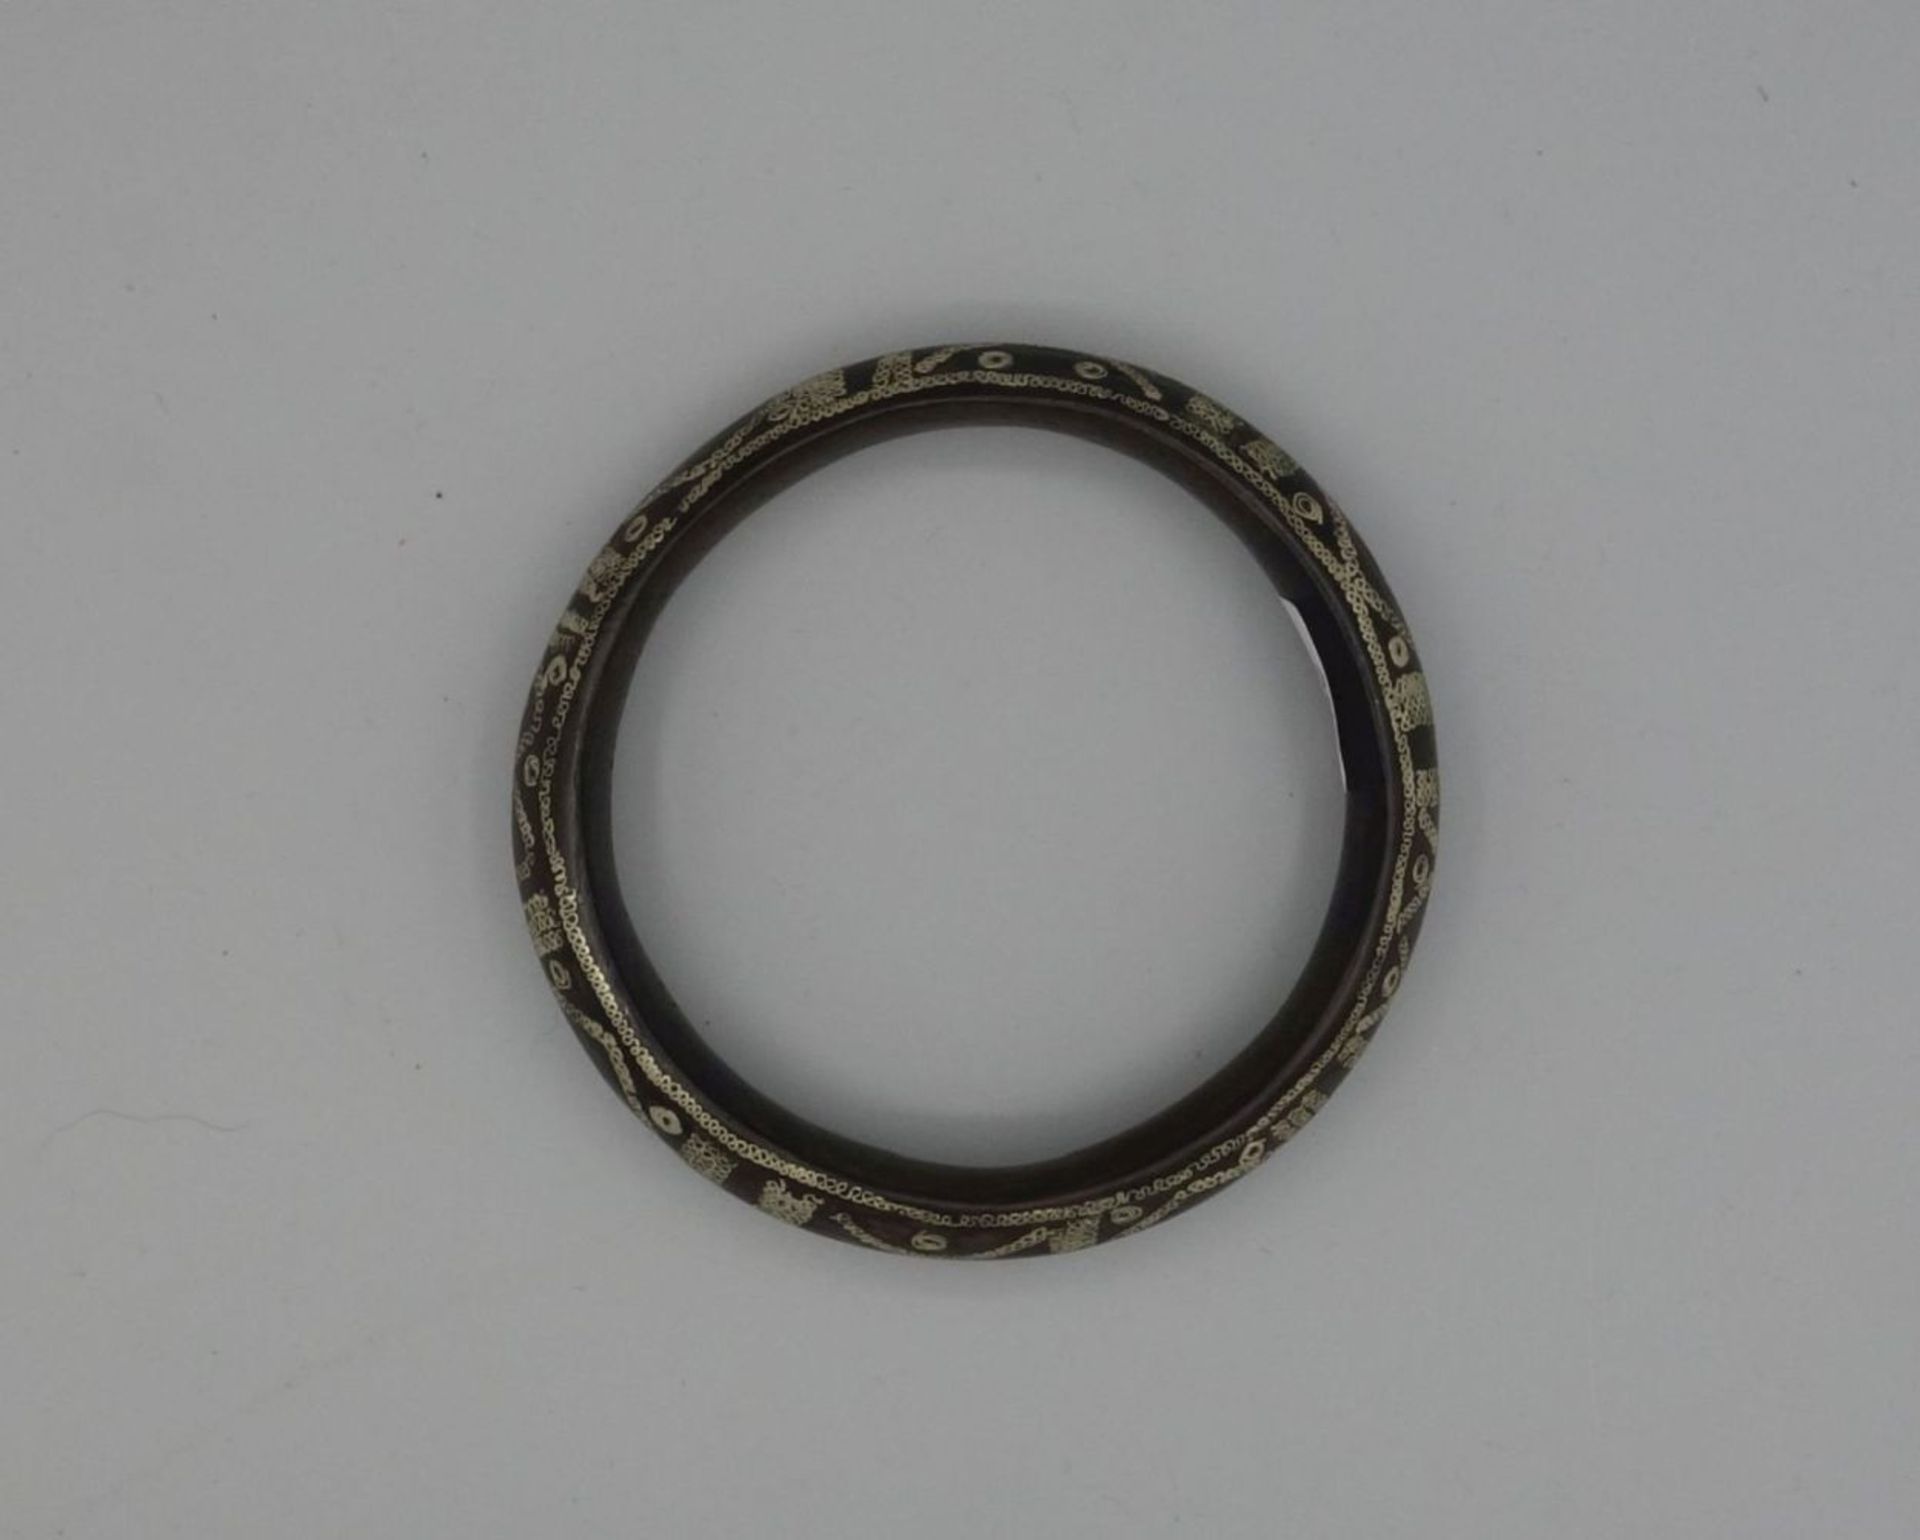 BERBER-SCHMUCK: ARMREIF / oriental bracelet, Mauretanien, Nordwest-Afrika. Holz. Monochrom - Image 3 of 3